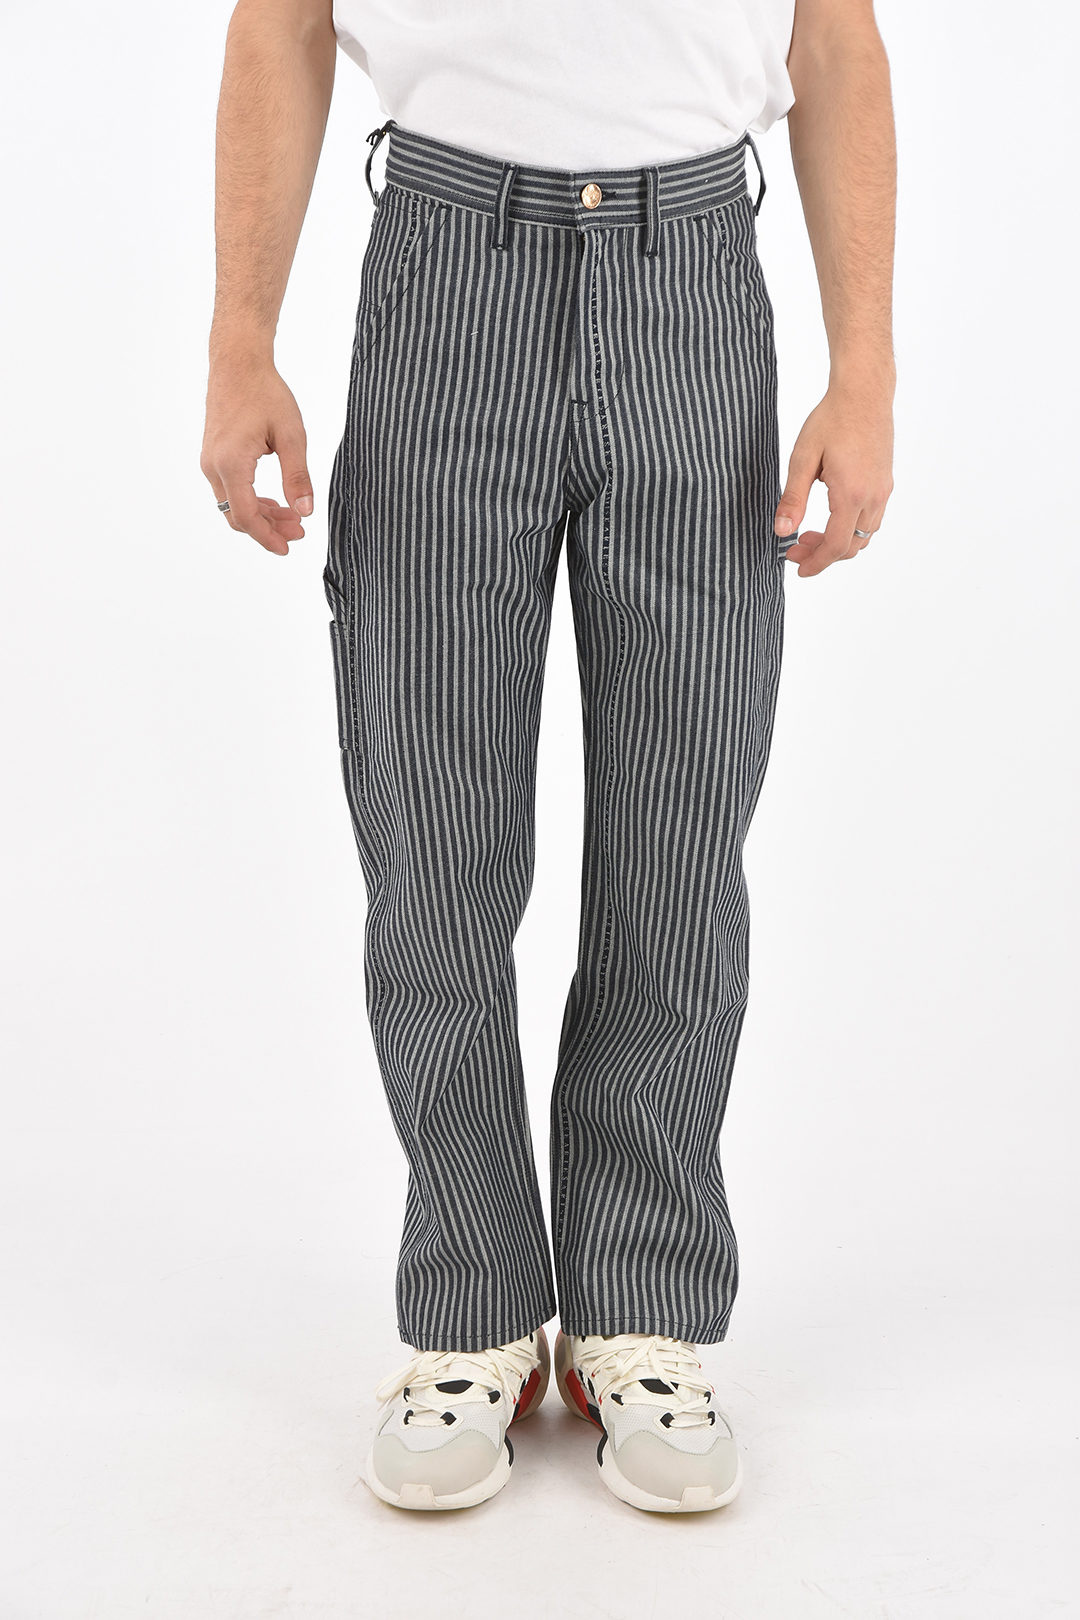 Aries LEE striped Carpenter pants men - Glamood Outlet